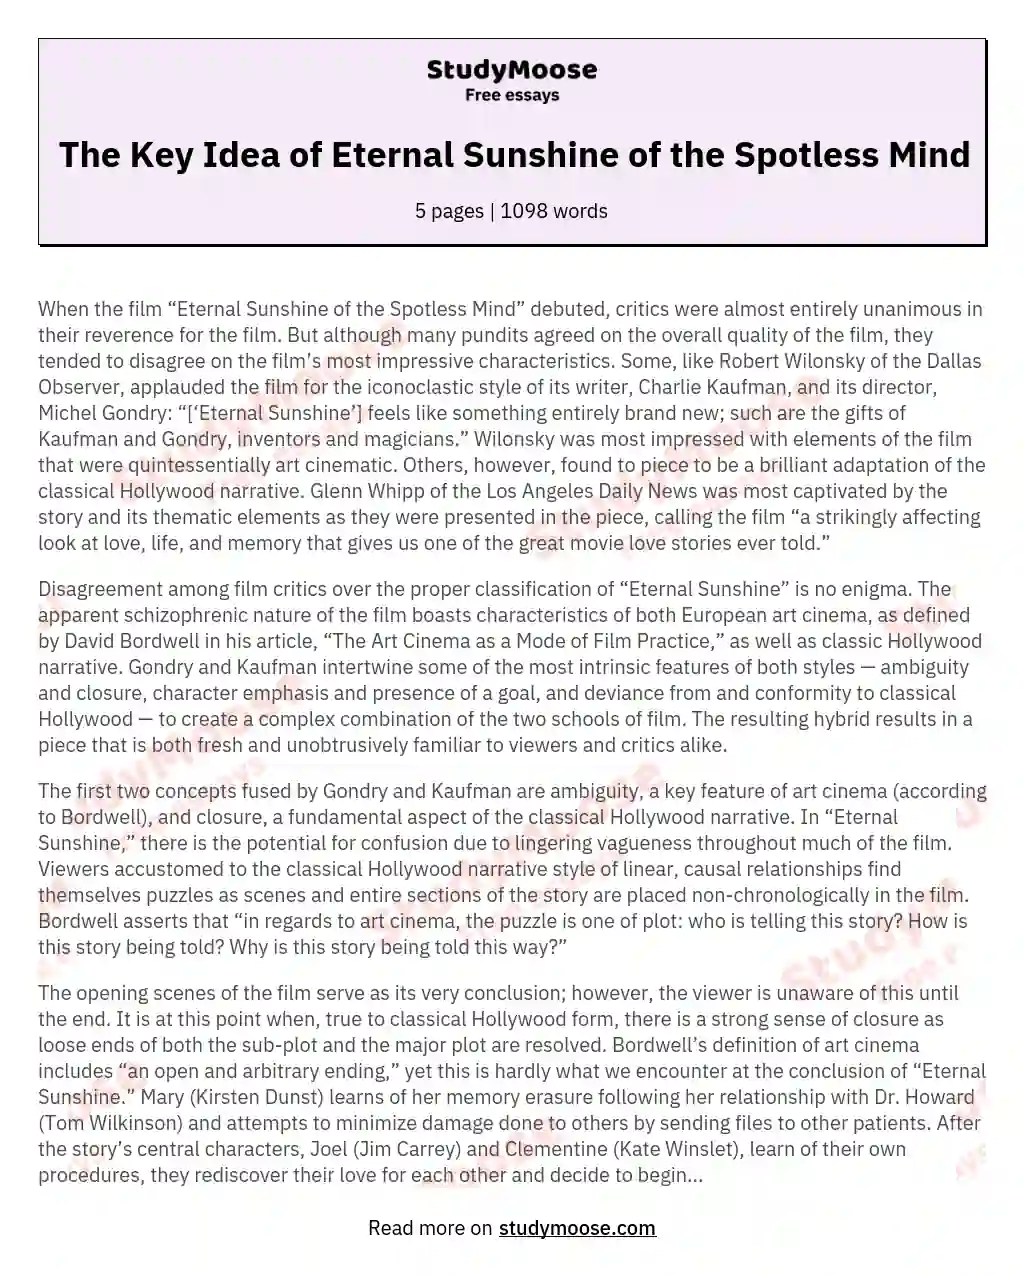 The Key Idea of Eternal Sunshine of the Spotless Mind